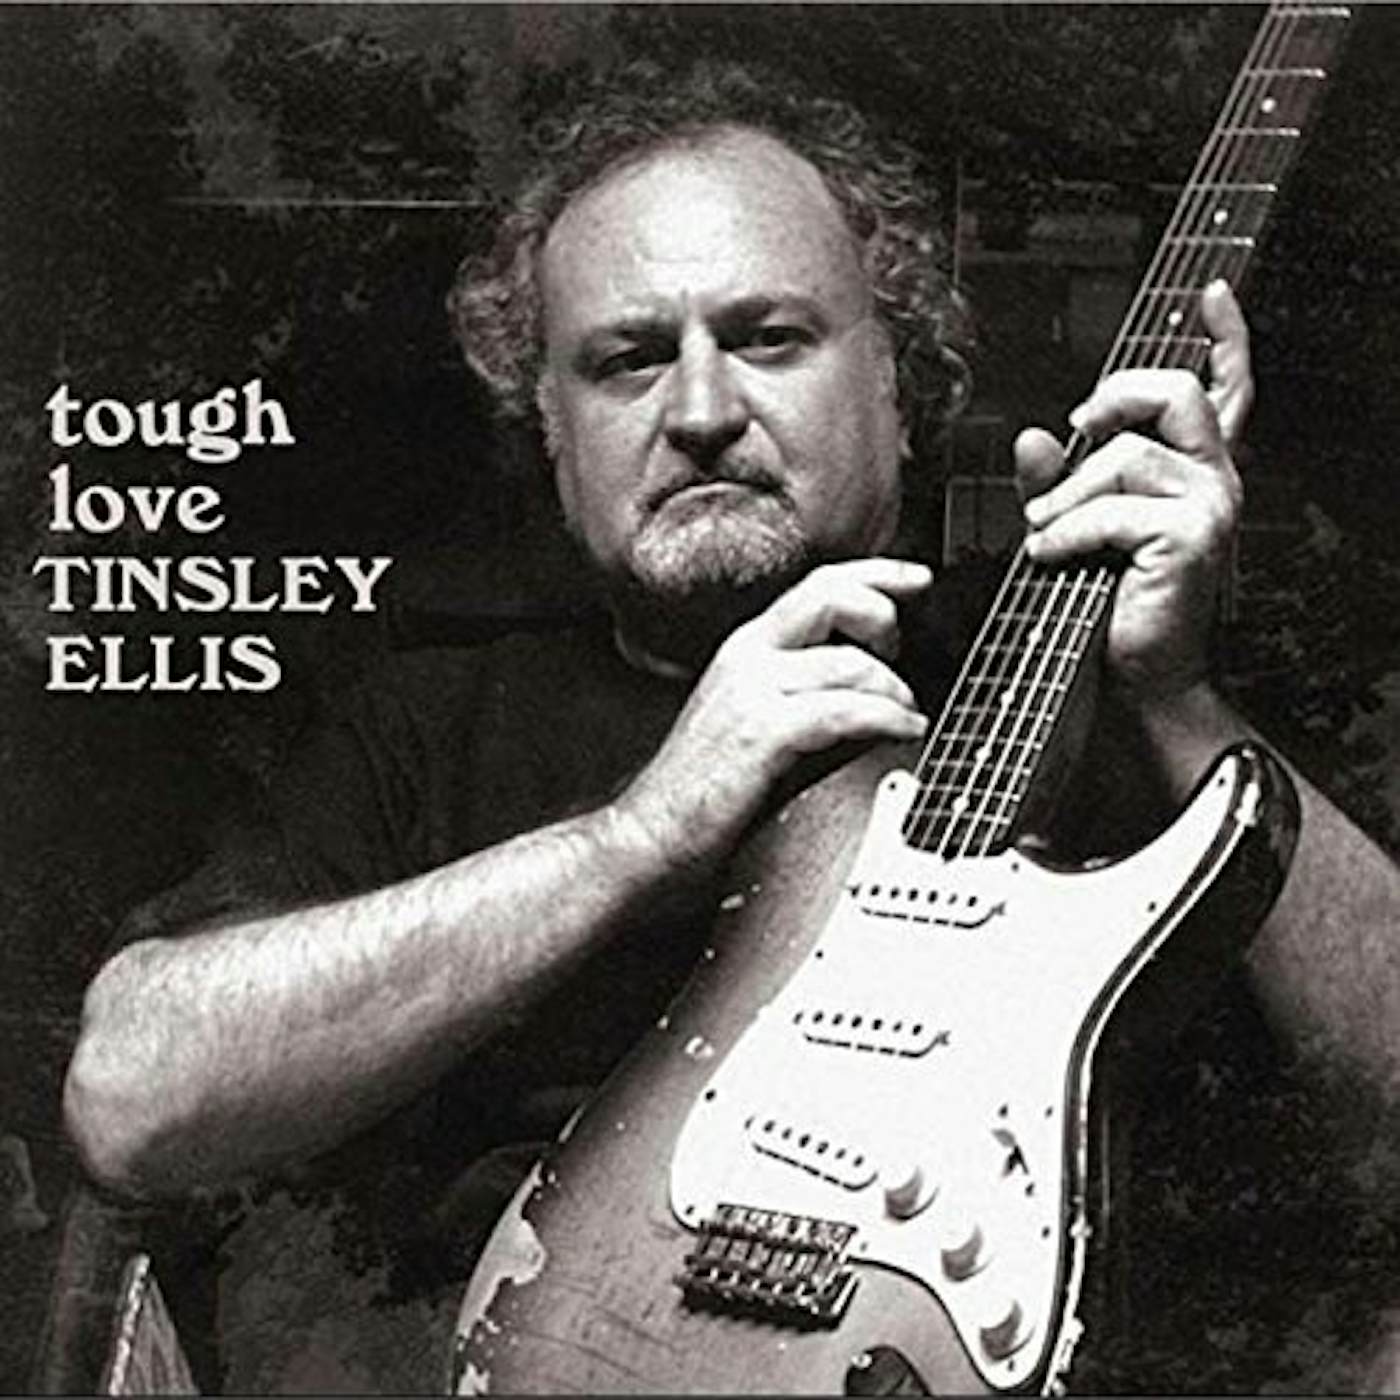 Tinsley Ellis Tough Love Vinyl Record